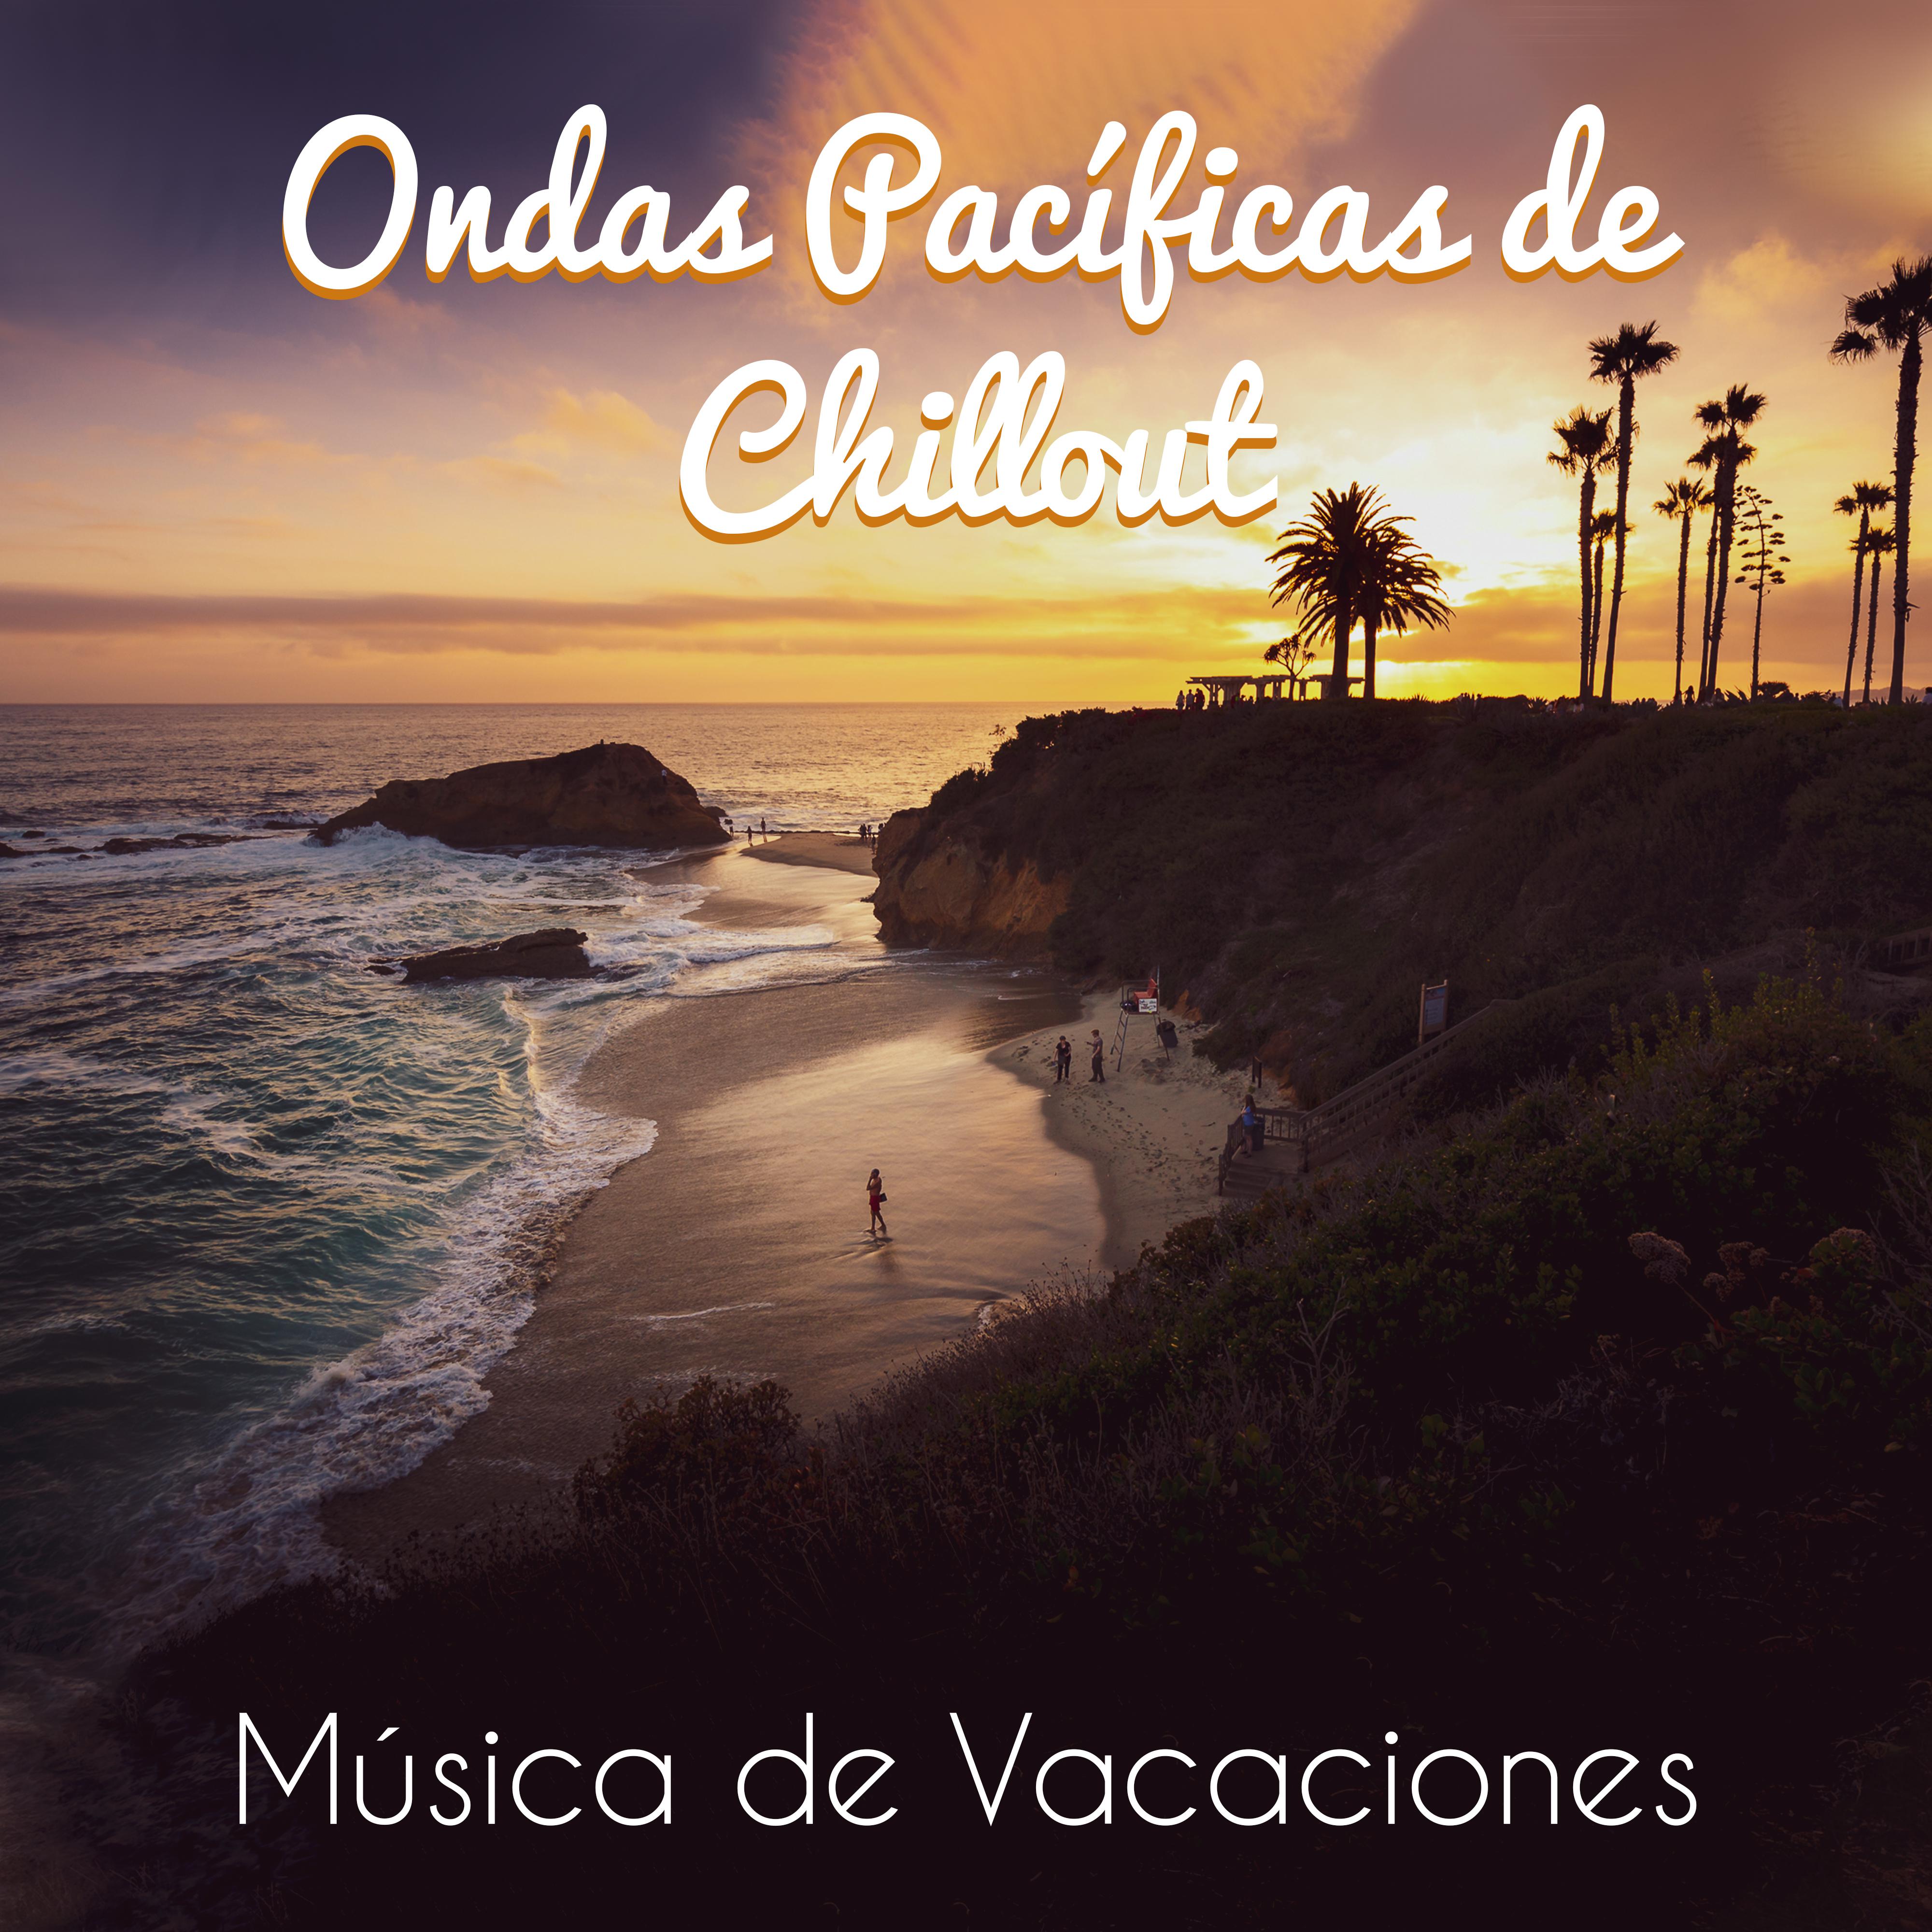 Ondas Pacíficas de Chillout - Música de Vacaciones